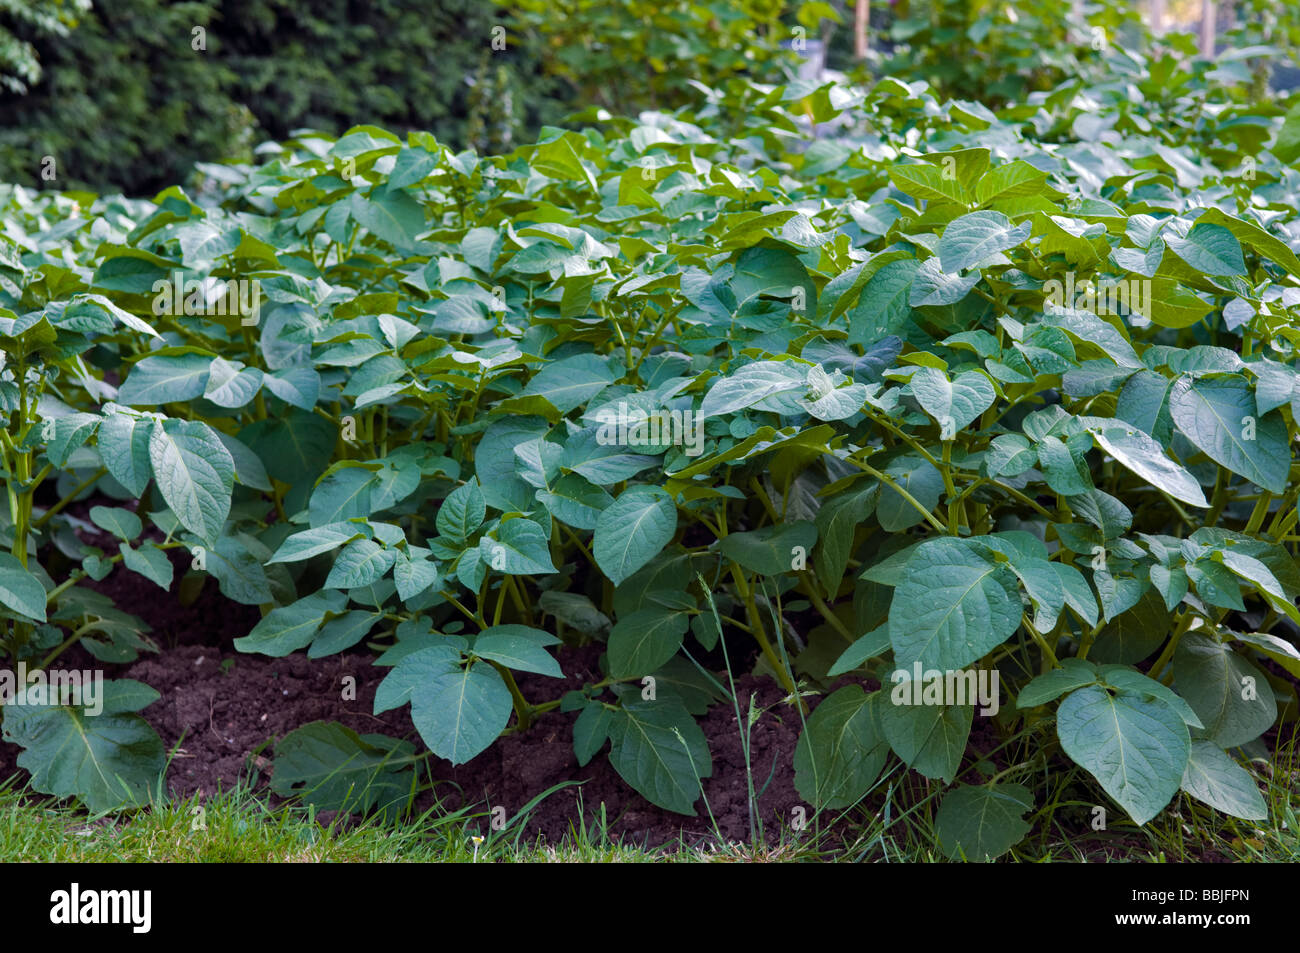 Potato patch growing in garden Stock Photo